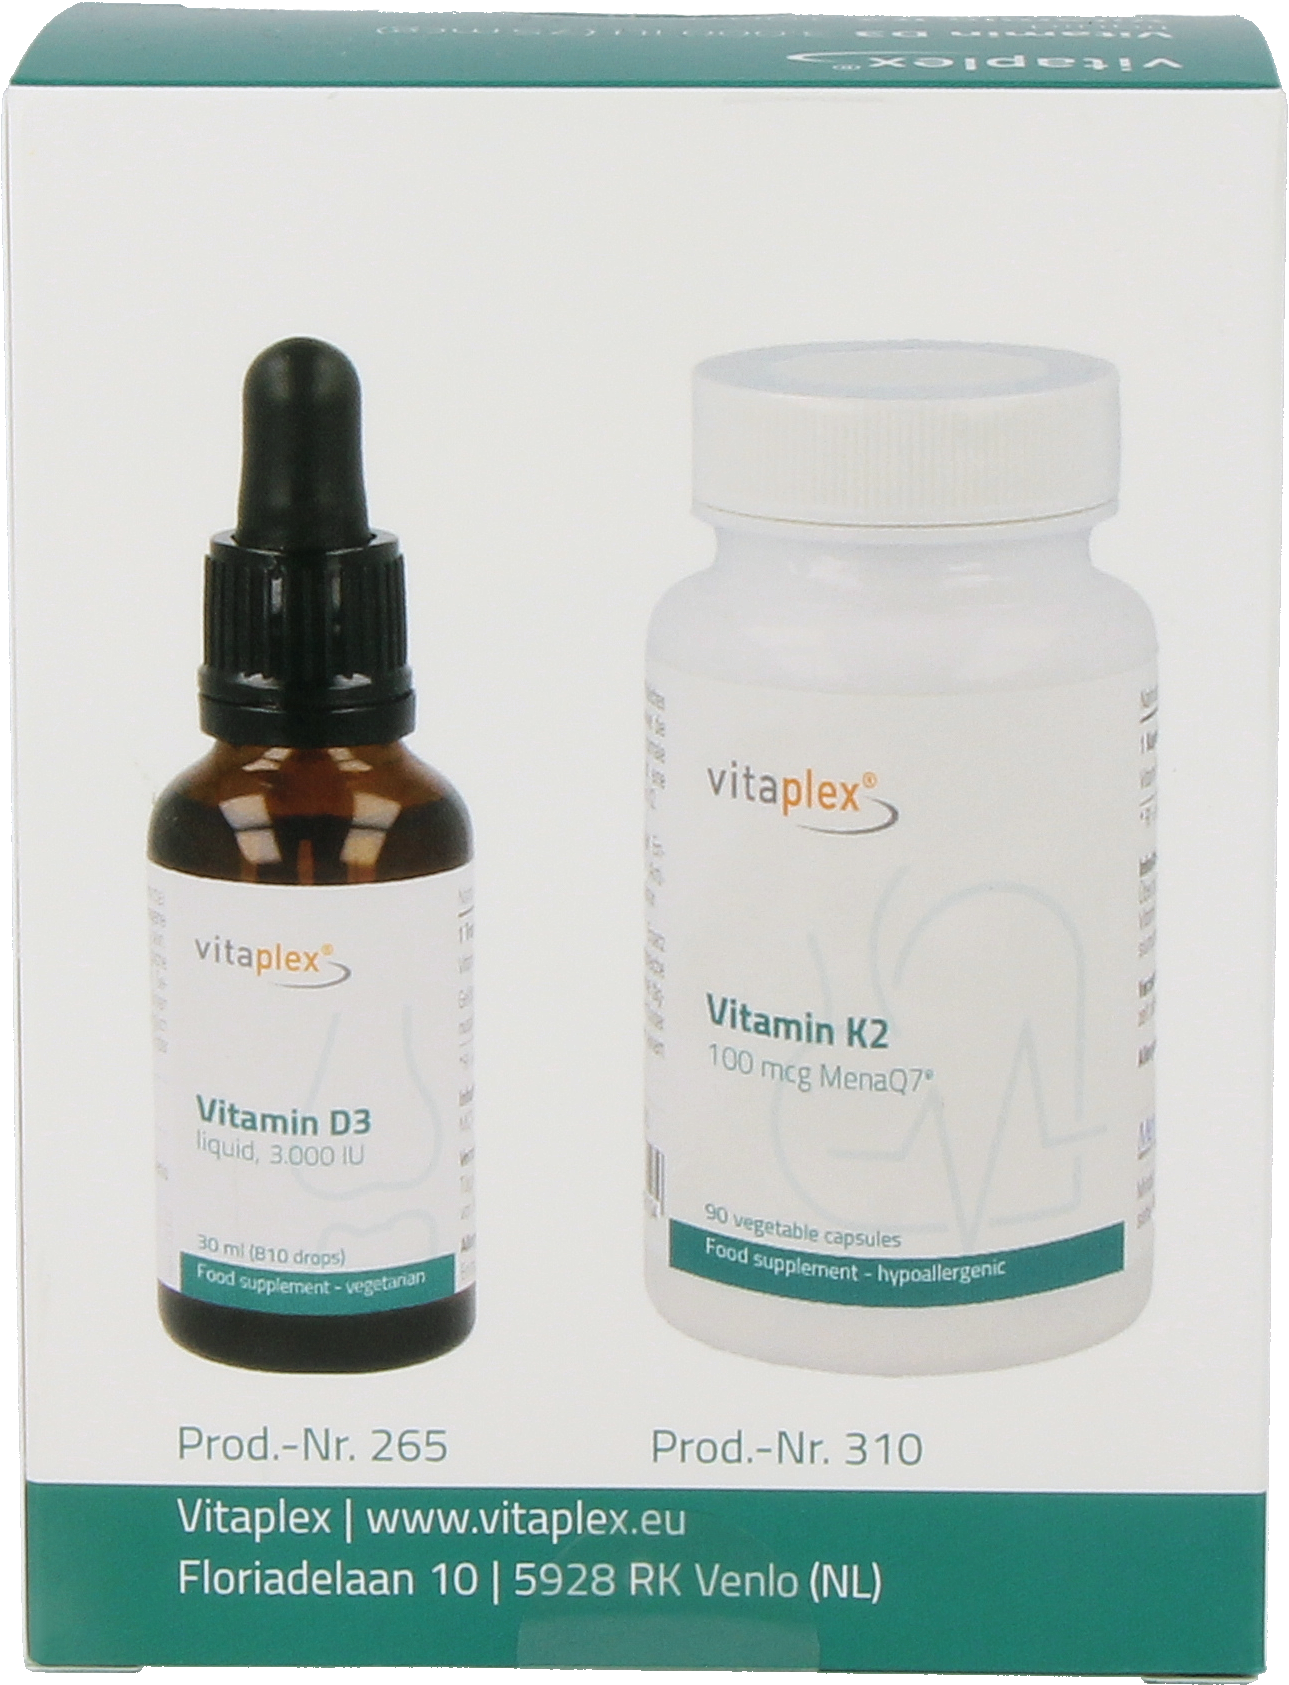 Bundelaanbieding Vitaplex Vitamine D3 & K2